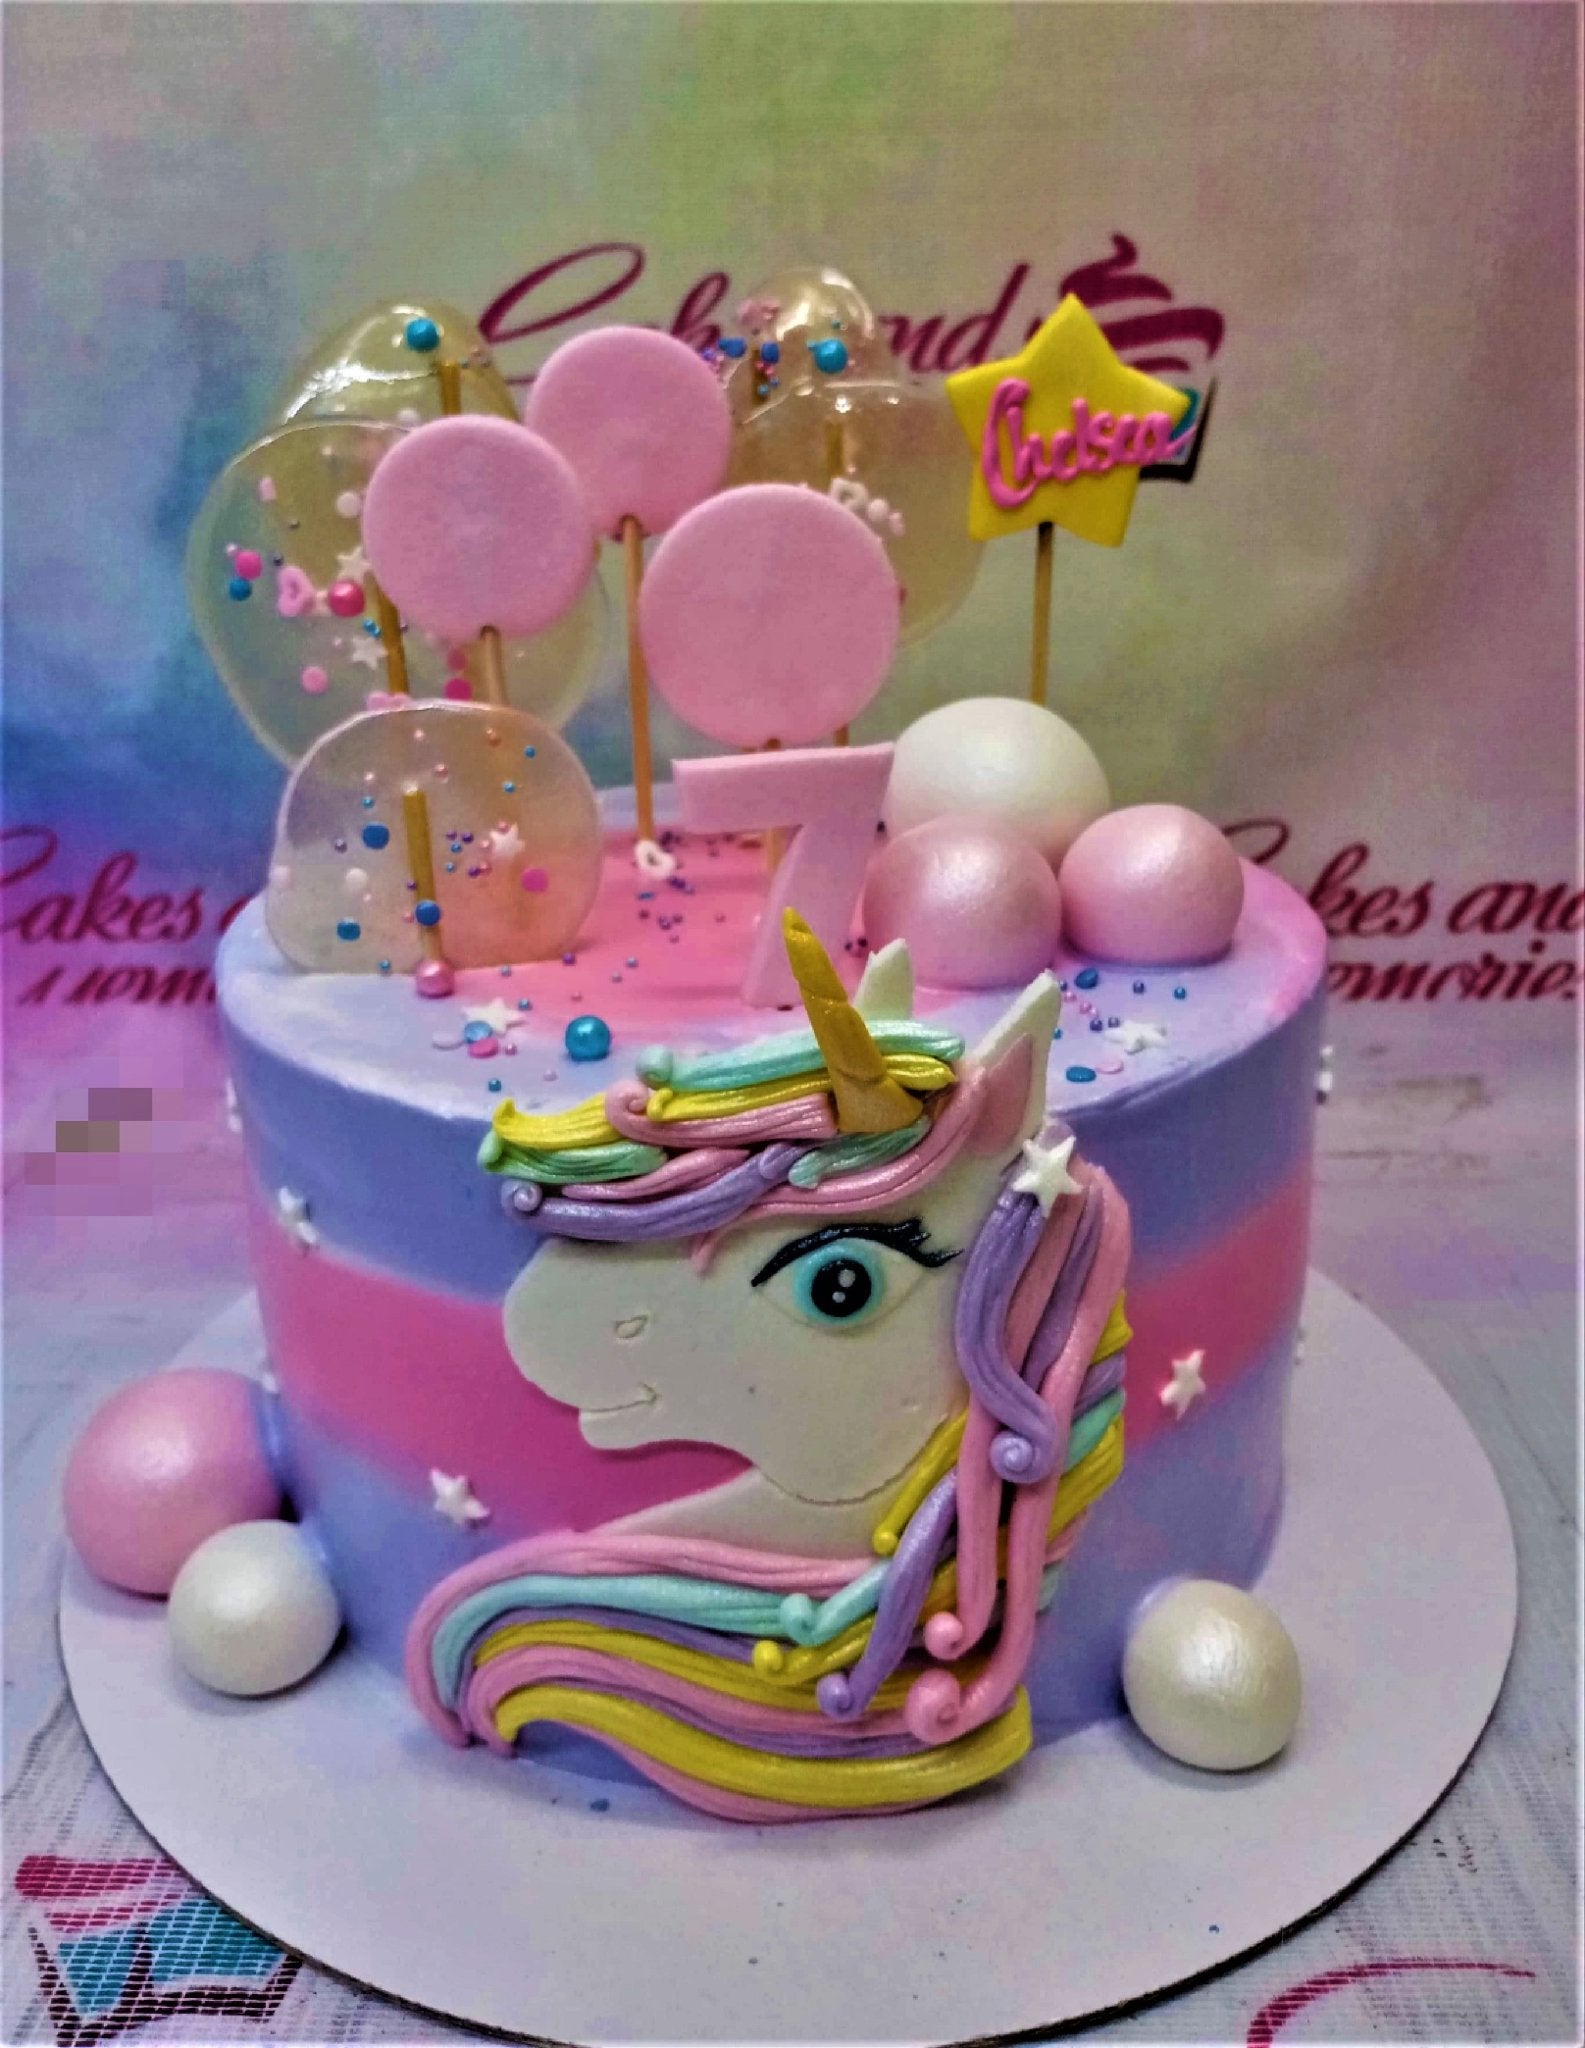 Buy/Send Space Unicorn Fondant Cake | The Cakery Shop